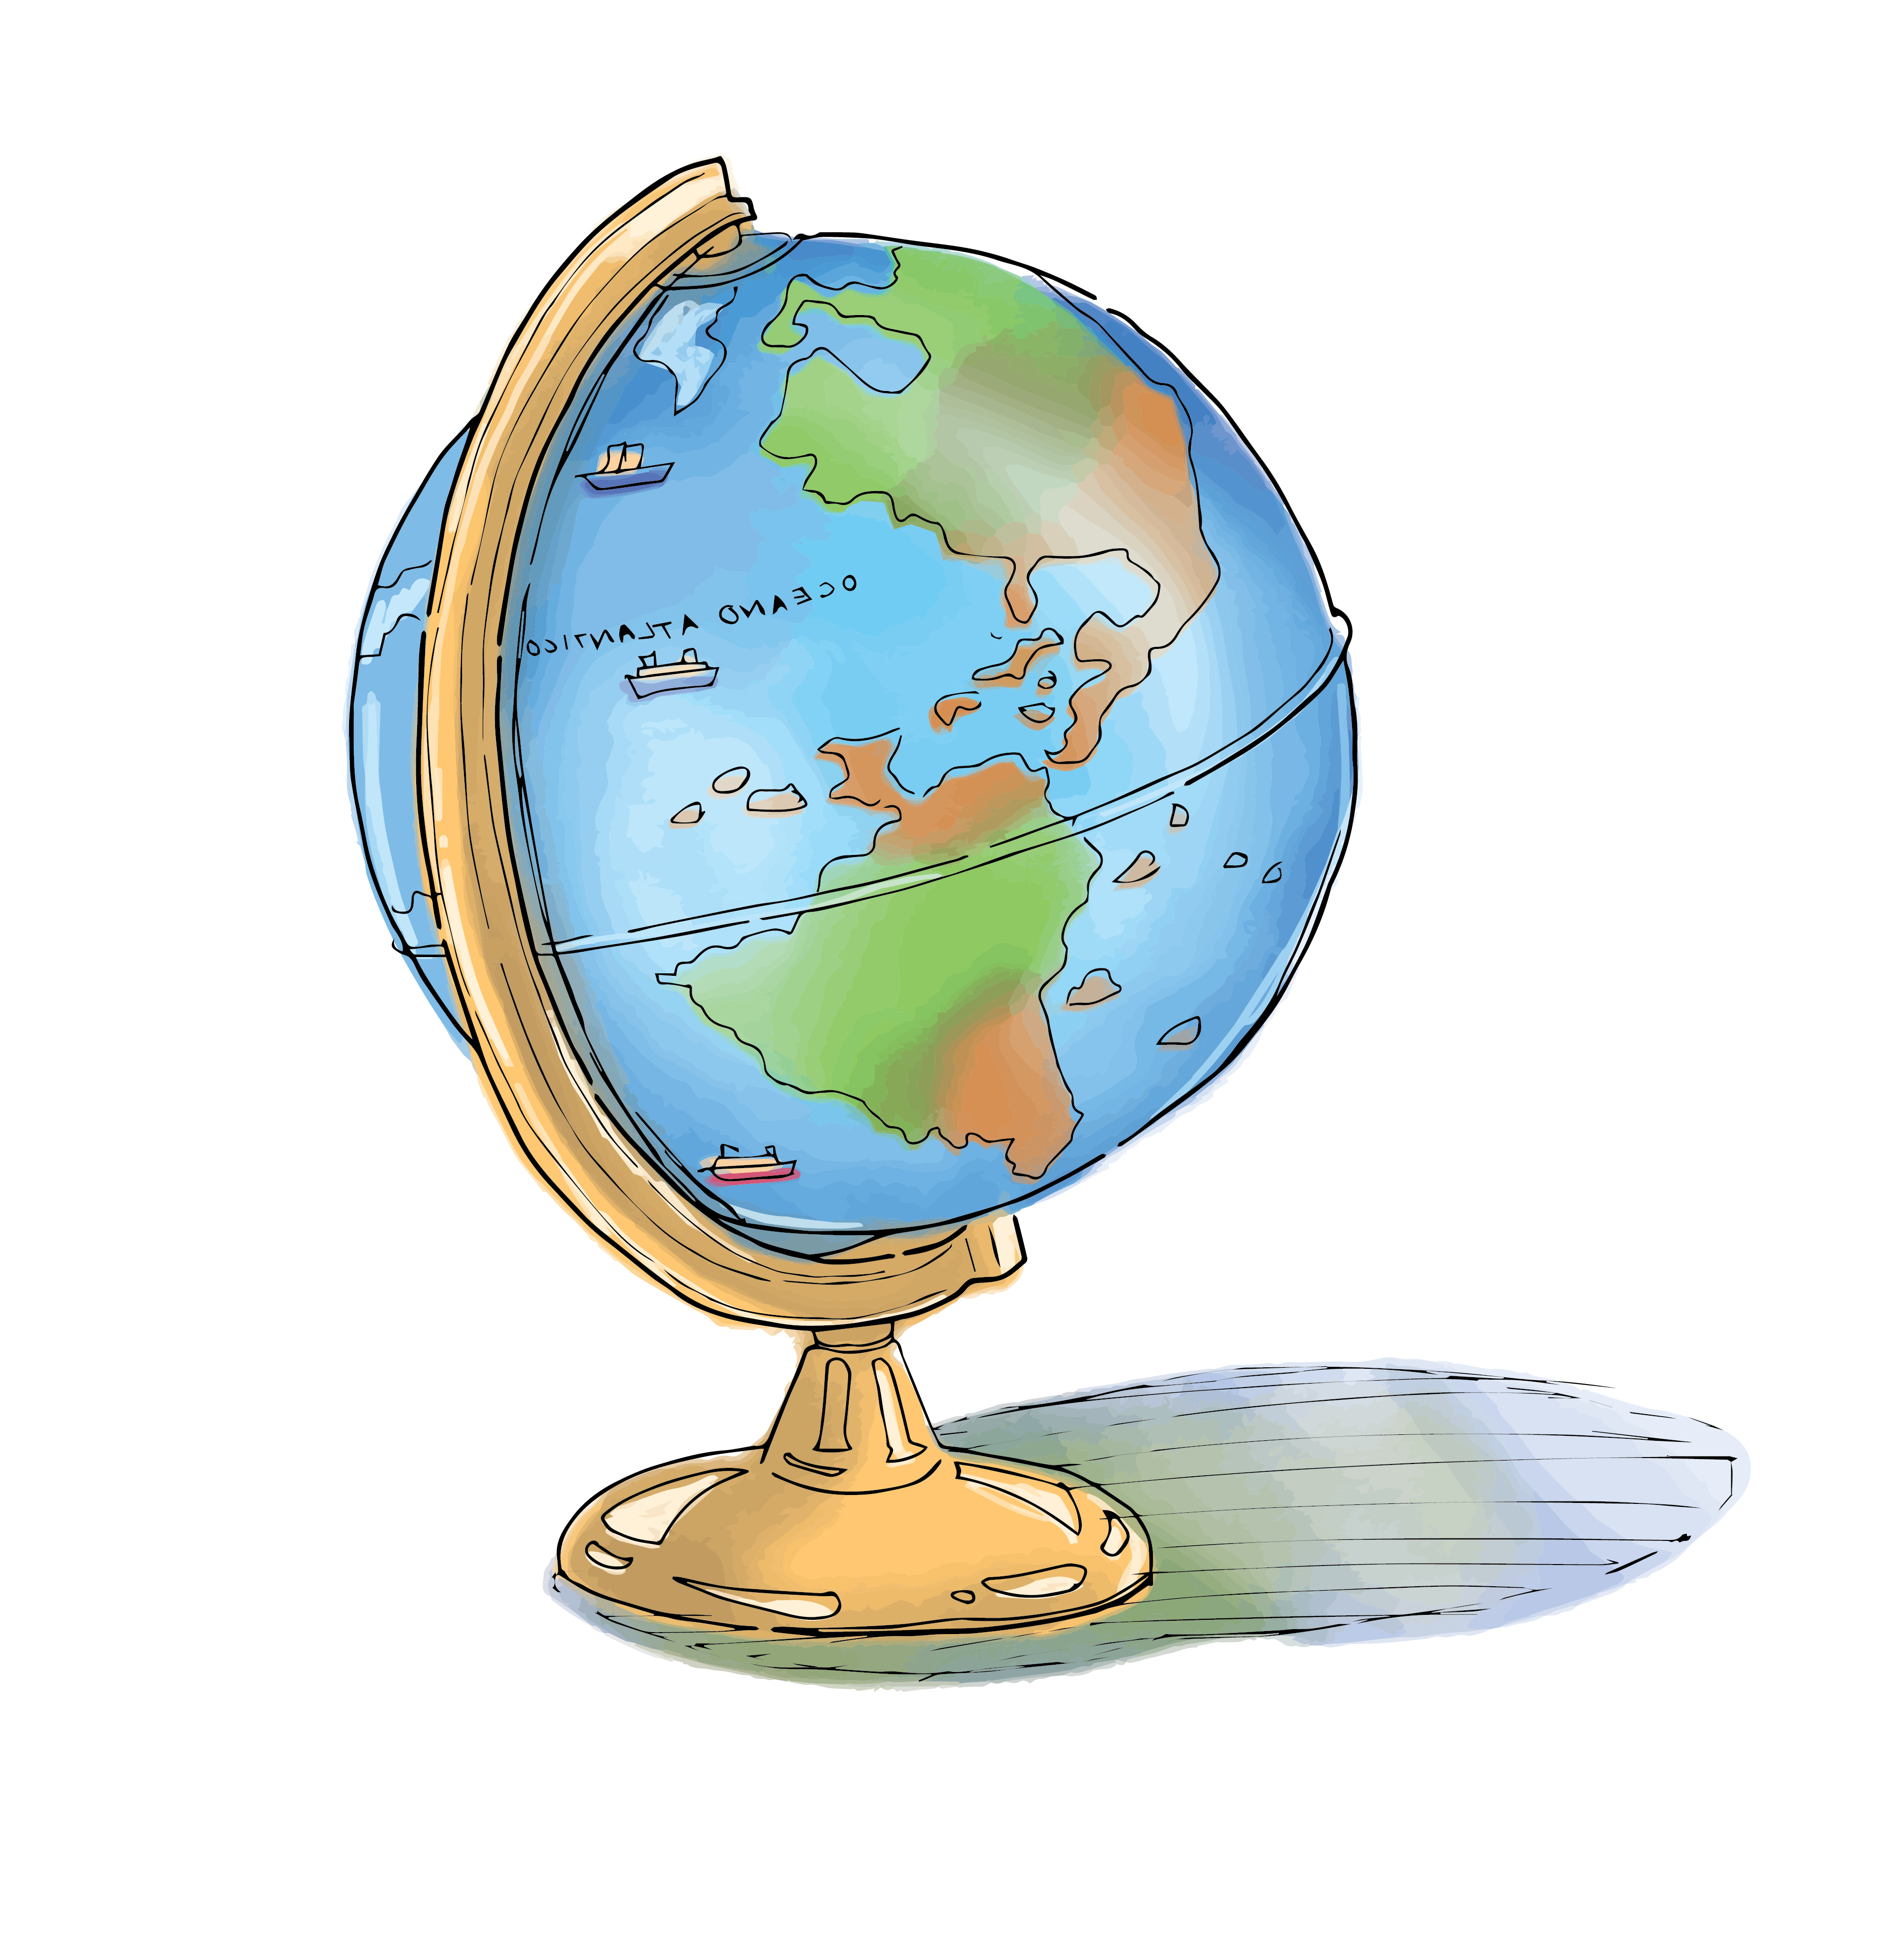 An illustration of a globe